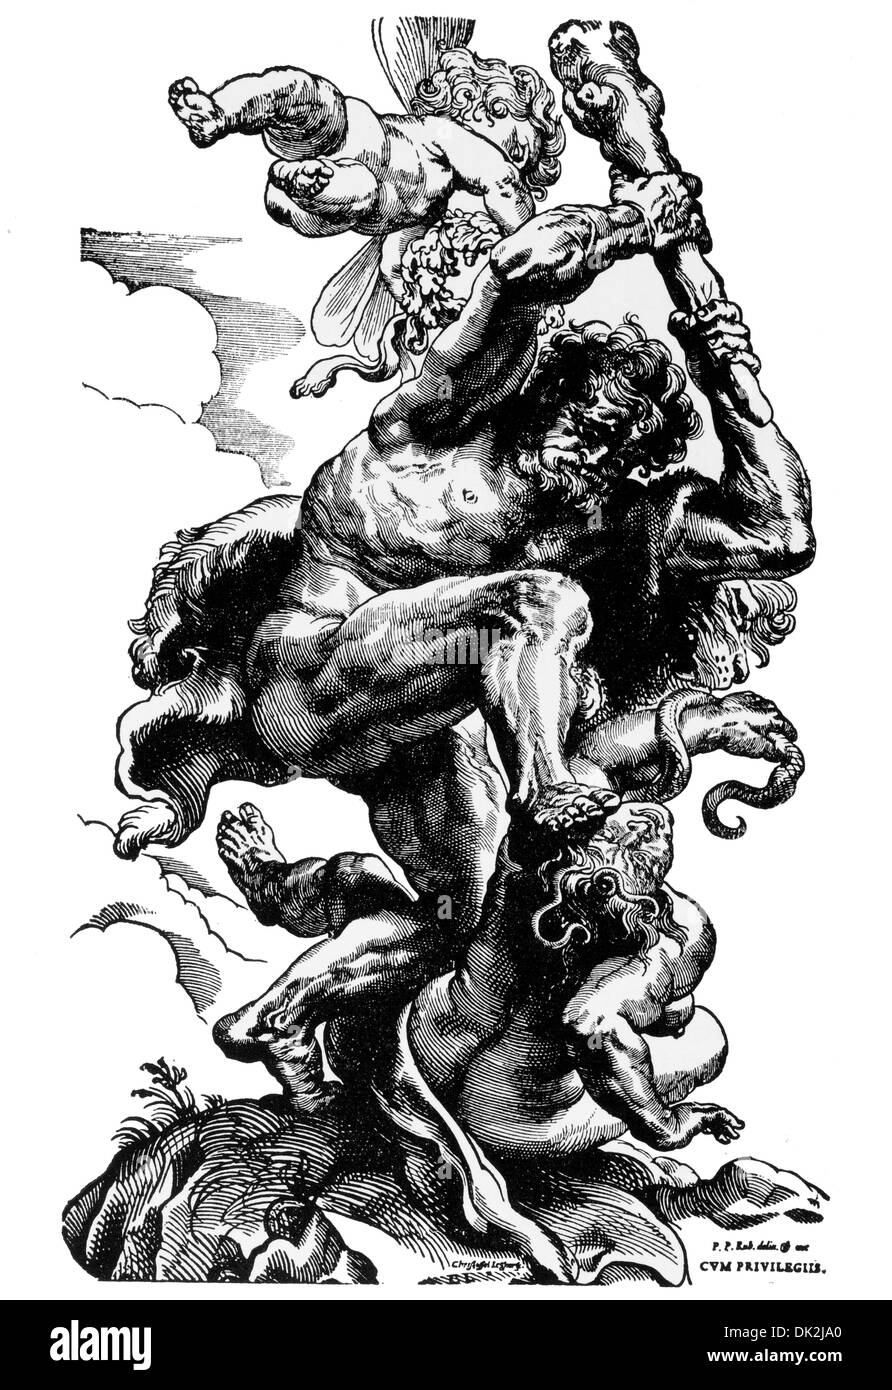 Cristóbal de Jegher: Hércules aplastando la envidia segundo trimestre del siglo XVII Foto de stock